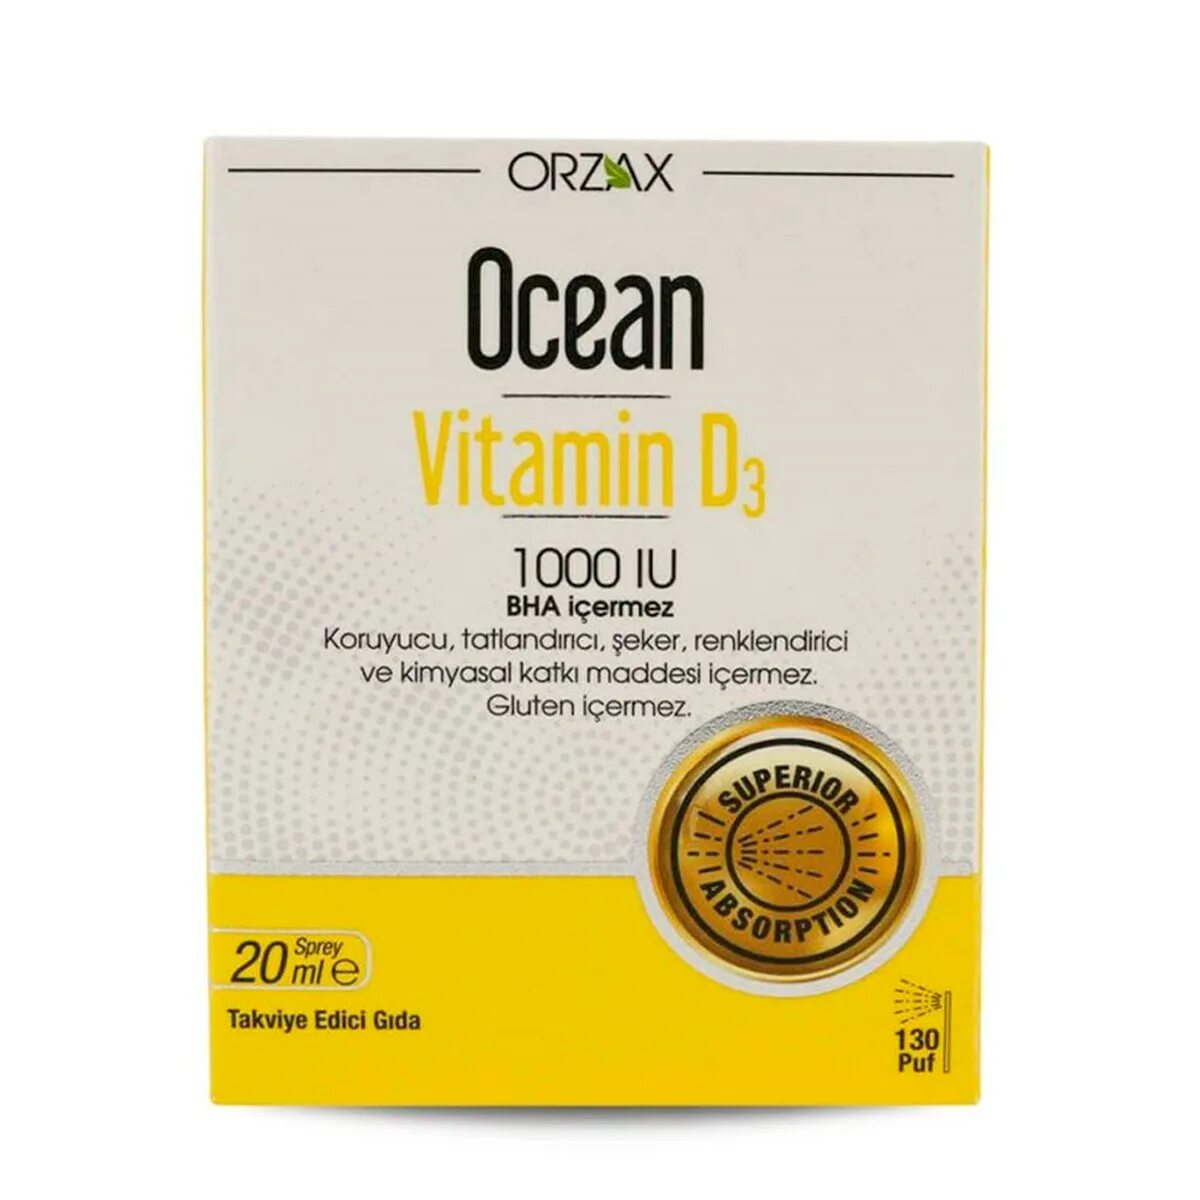 Orzax Ocean Vitamin d3 1000 IU Spray 20 ml. Витамины Orzax Ocean Vitamin d3. Orzax Vitamin d3 400. Ocean Vitamin d3 400 UI Orzax 20ml.